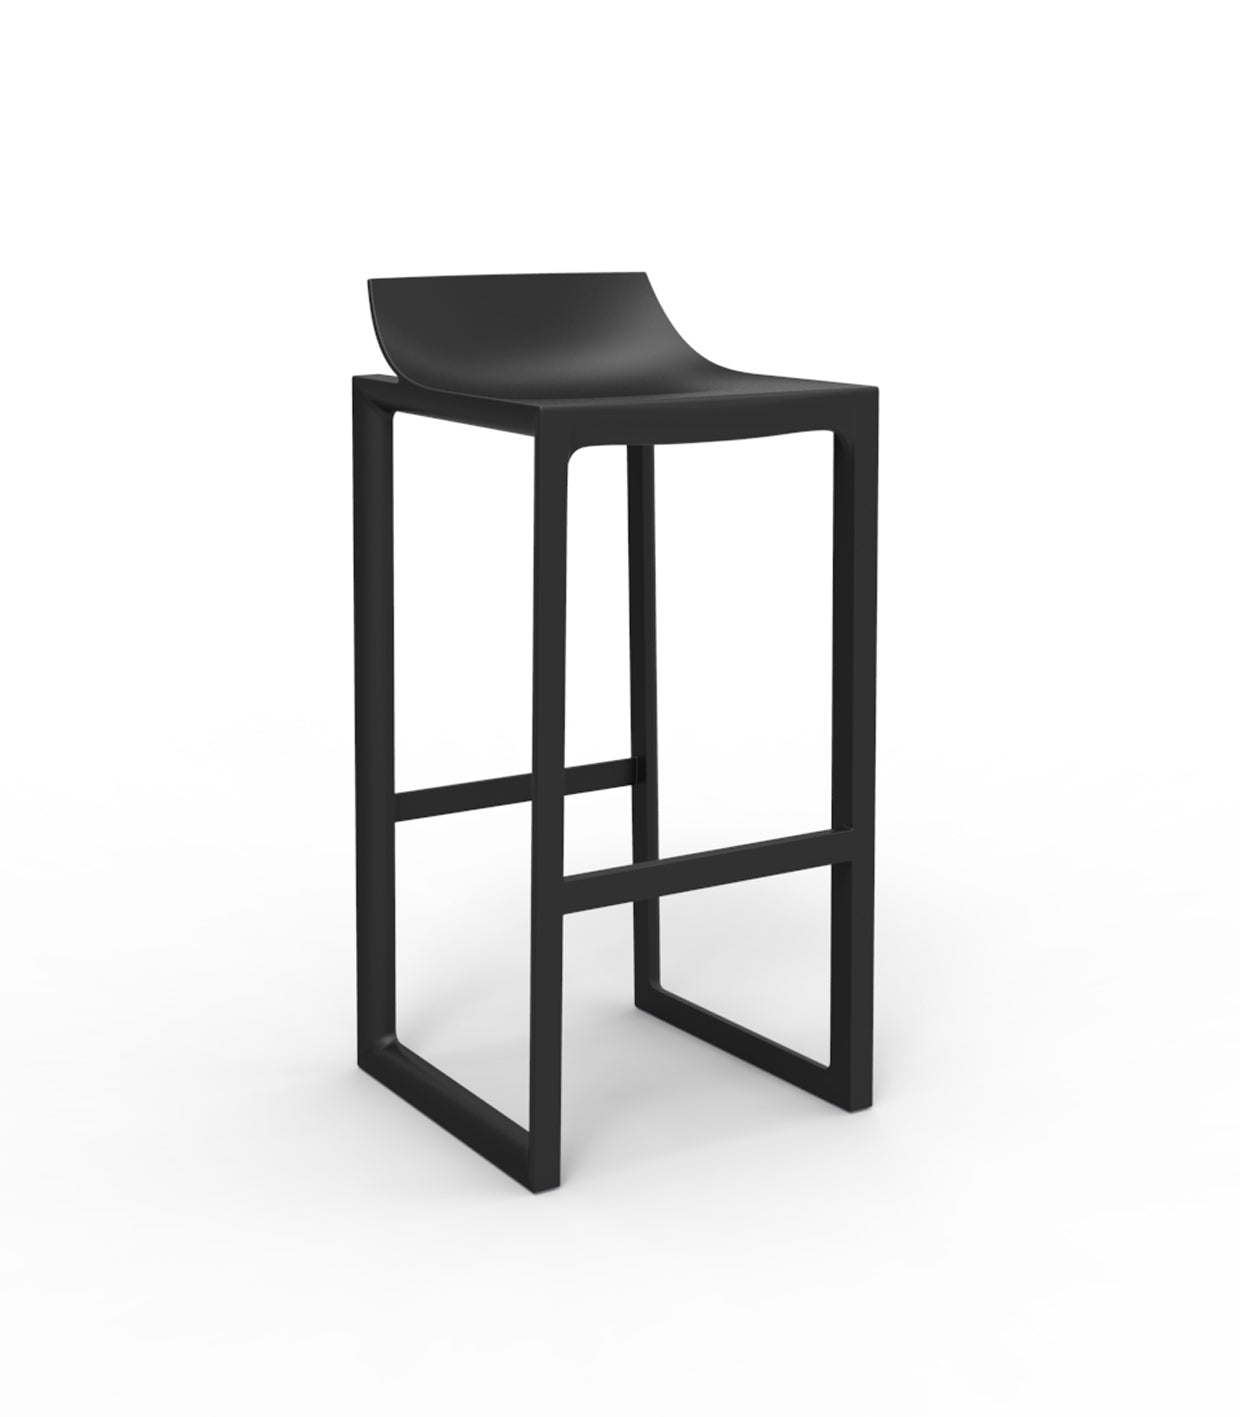 Wallstreet stool